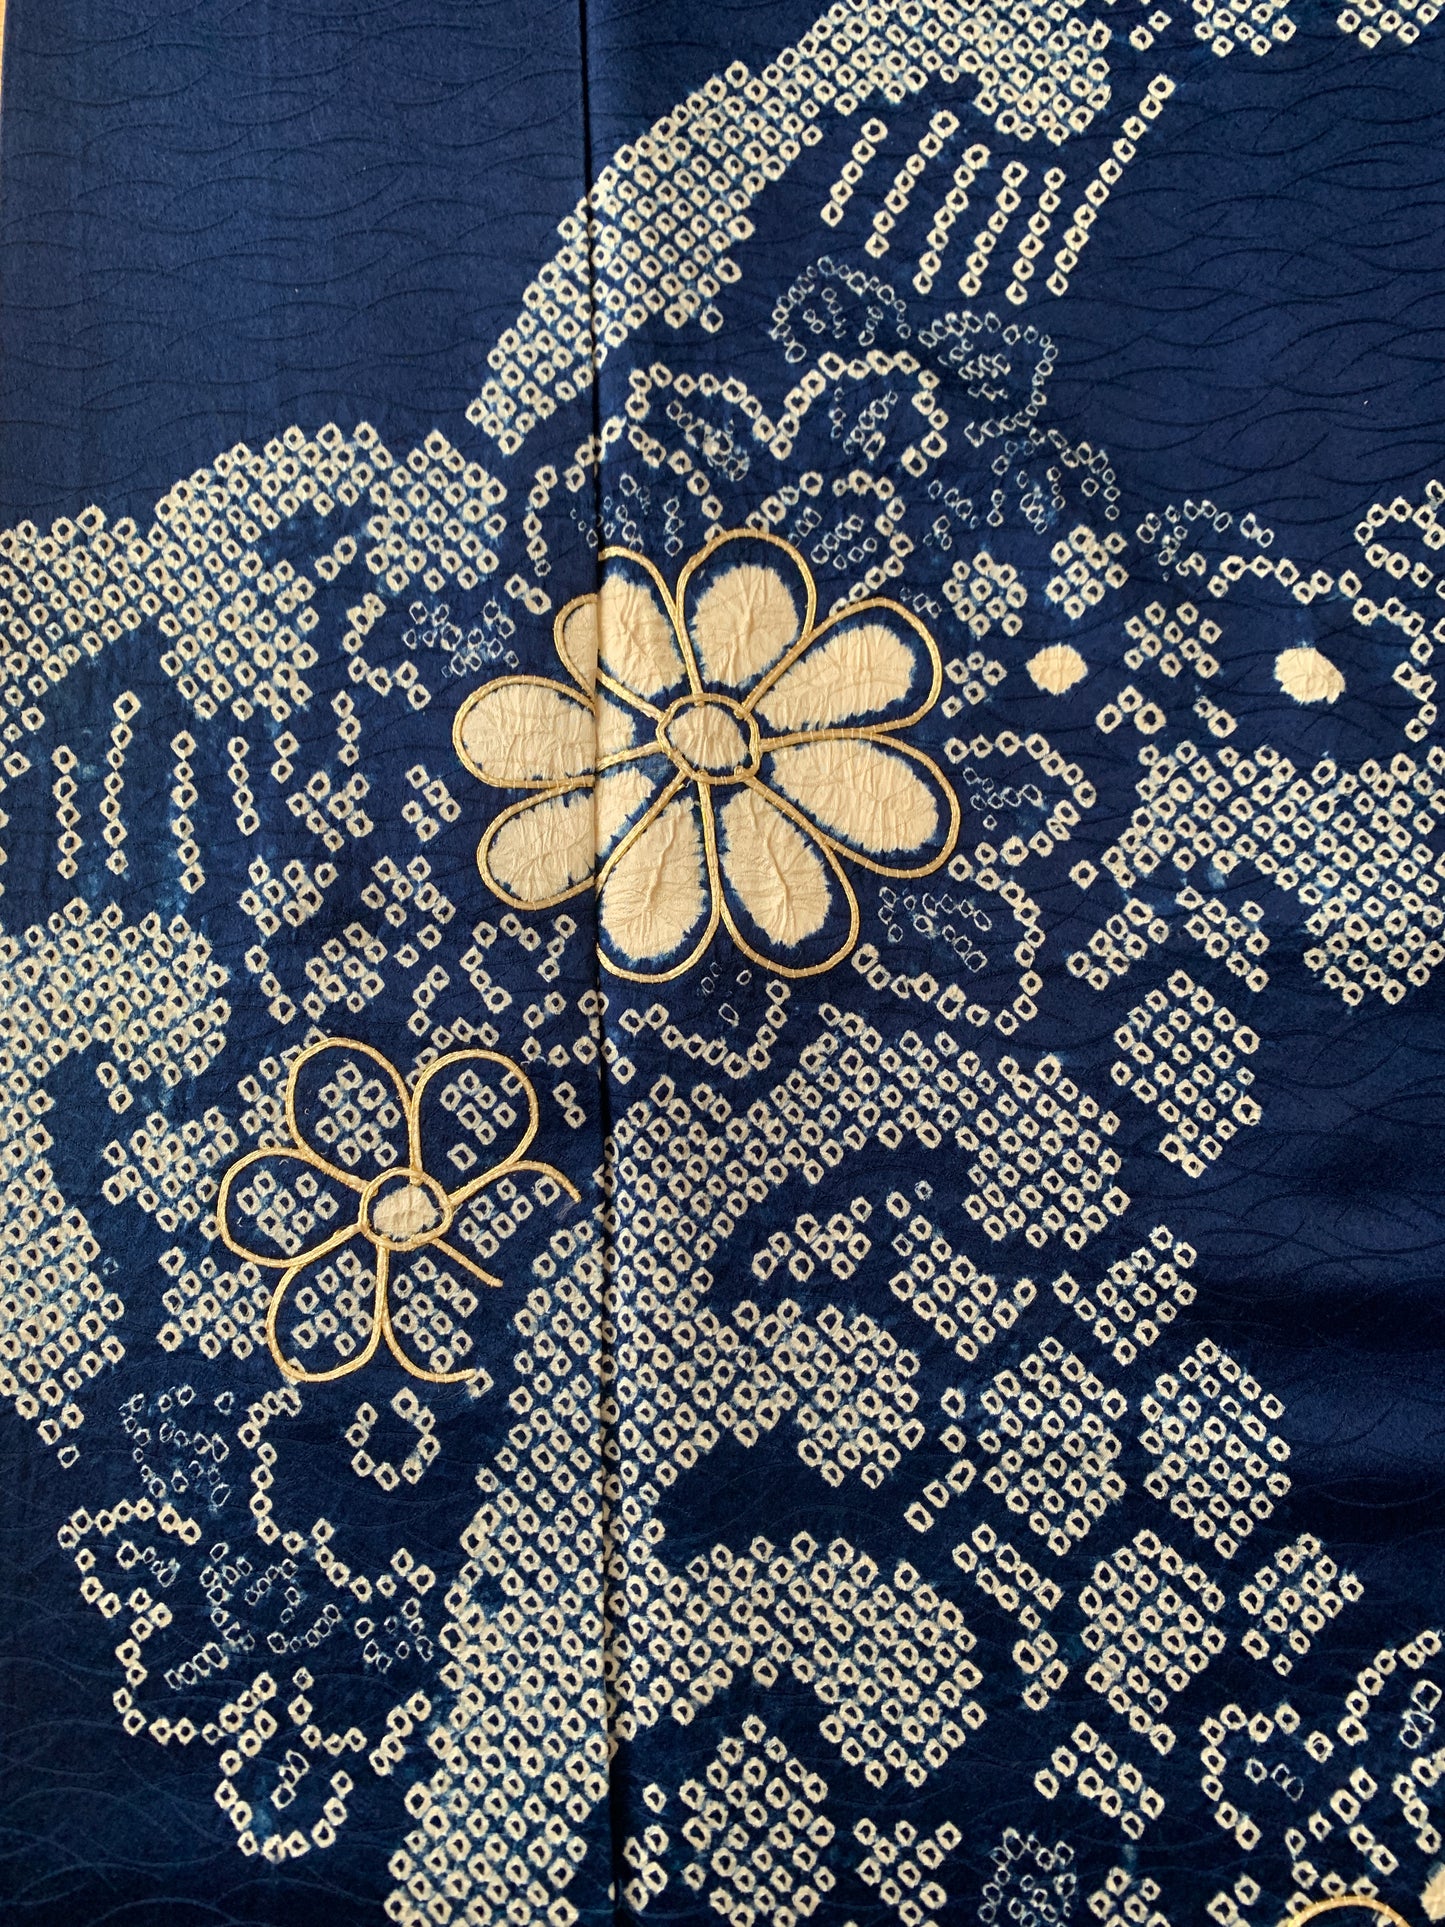 Kimono fabric for custom dress order, fabric #113